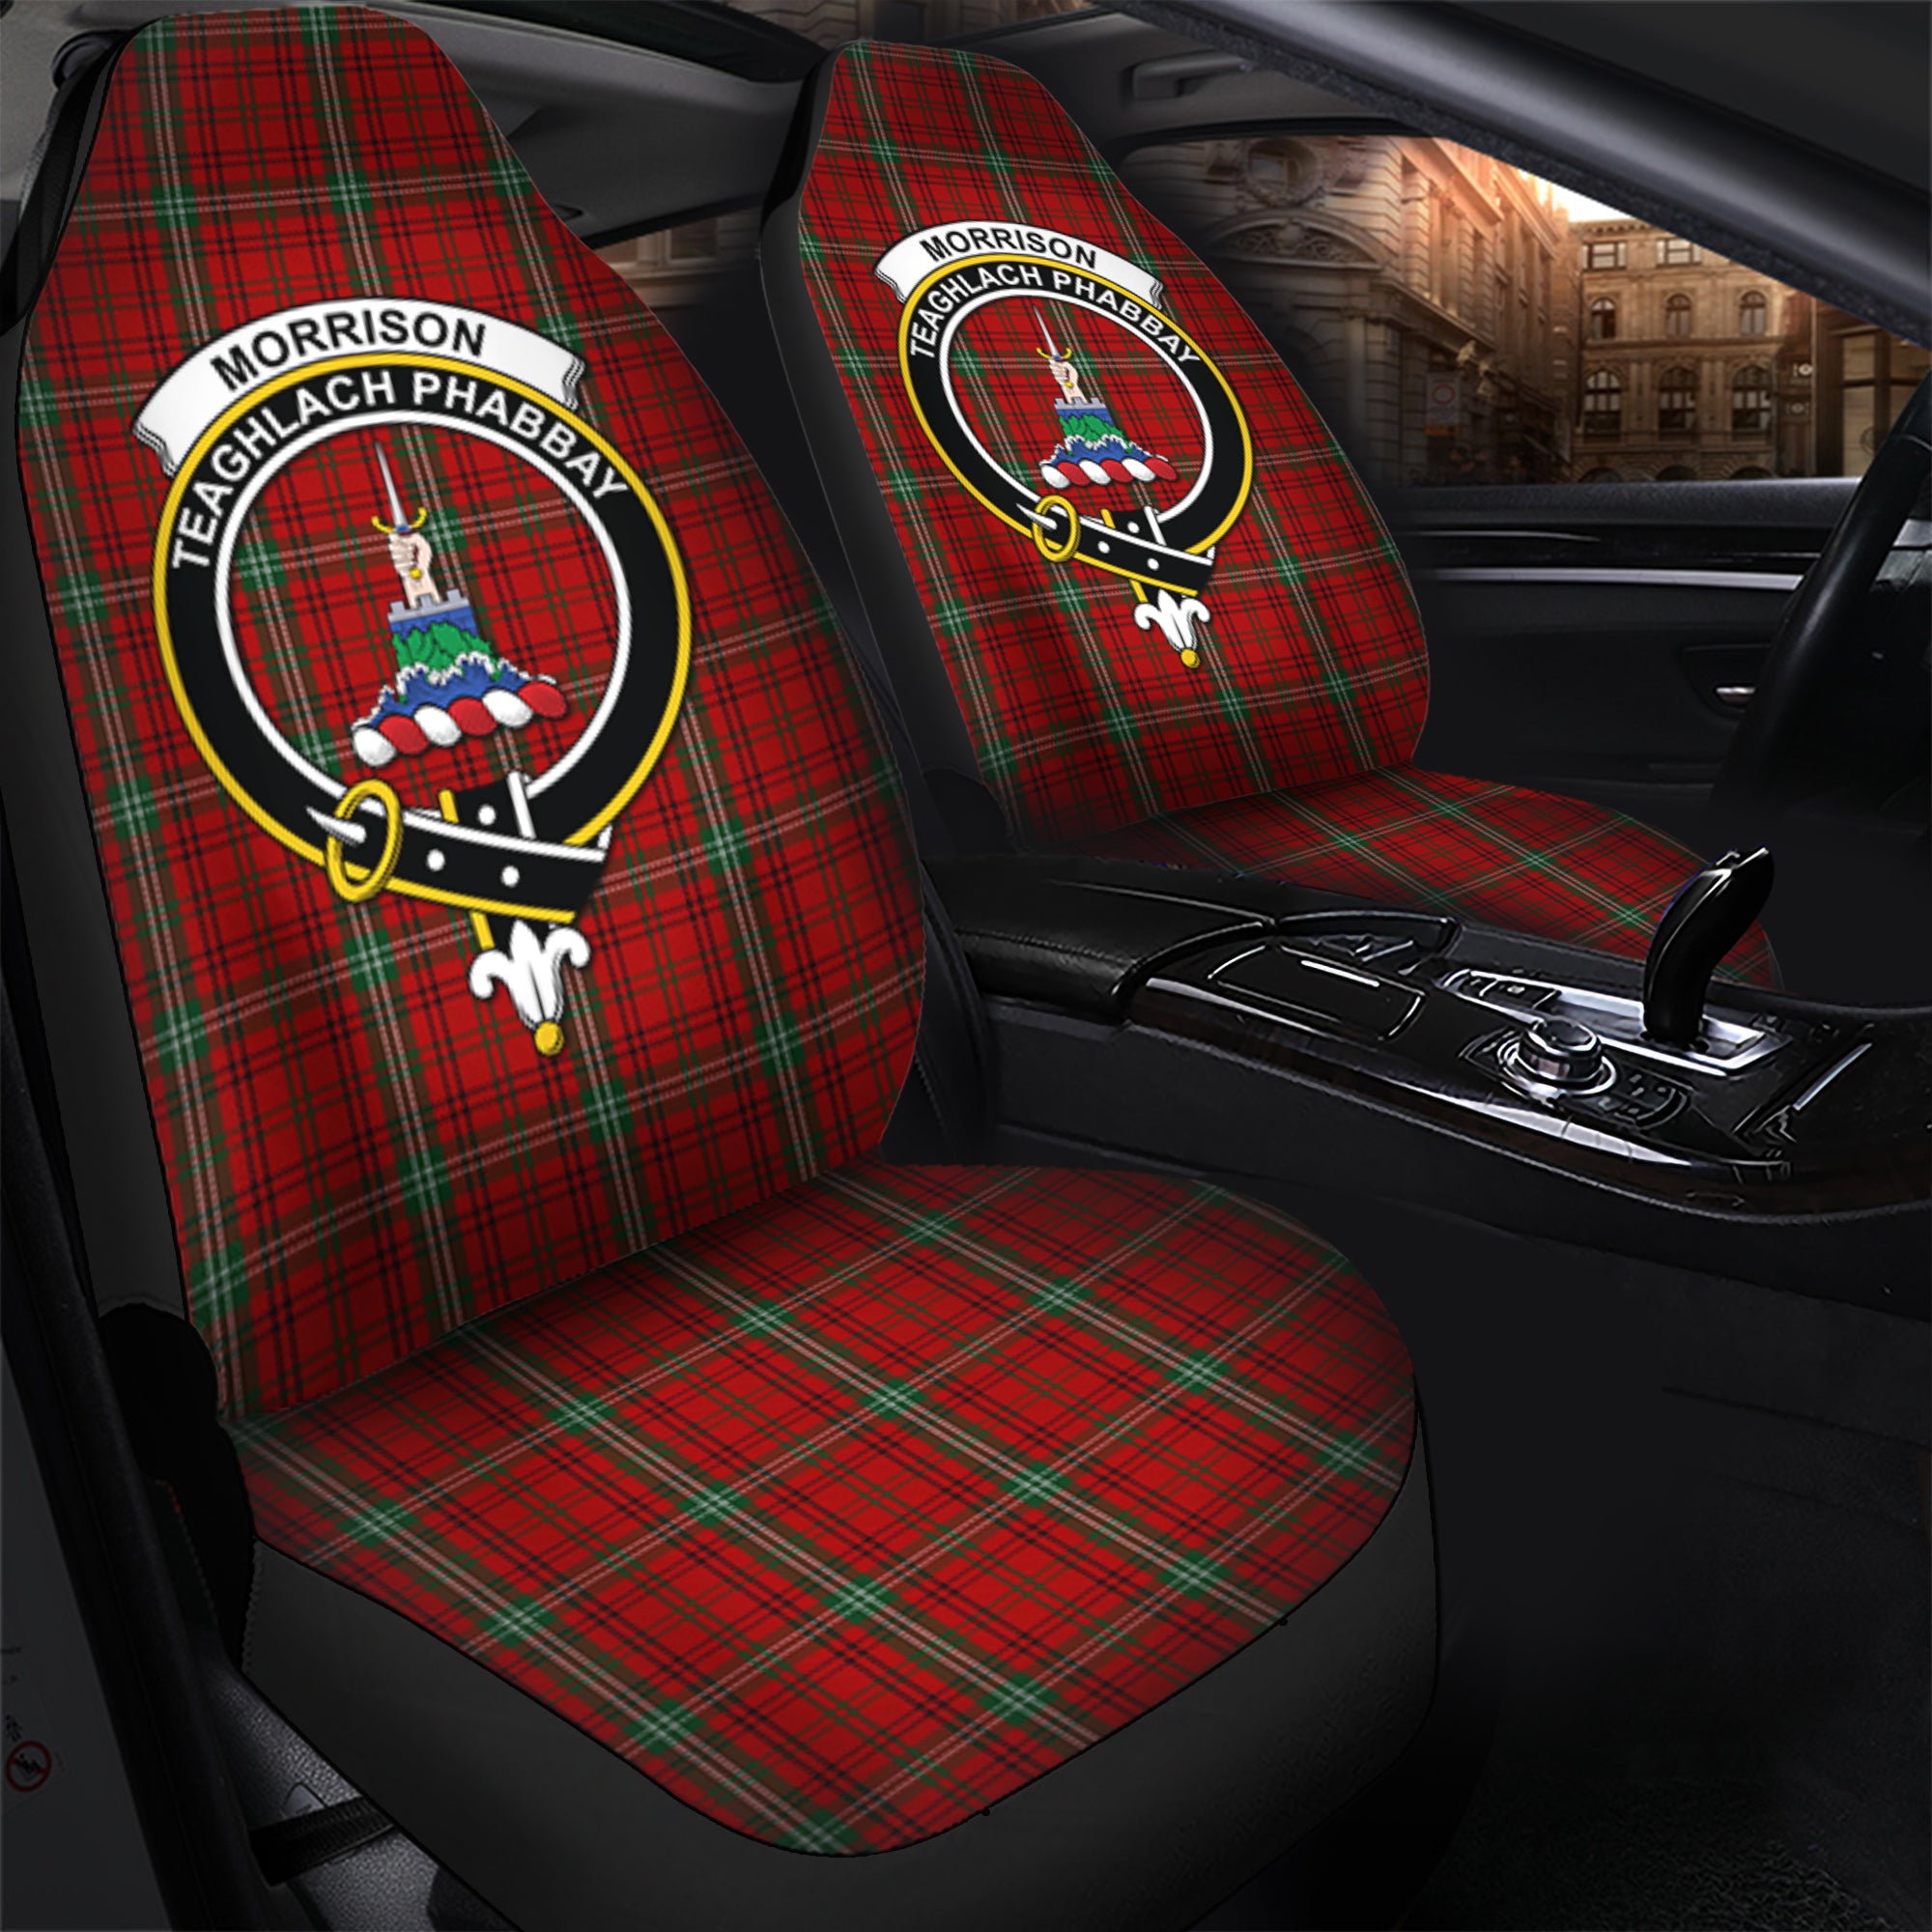 Morrison Ancient Clan Tartan Car Seat Cover, Family Crest Tartan Seat Cover TS23